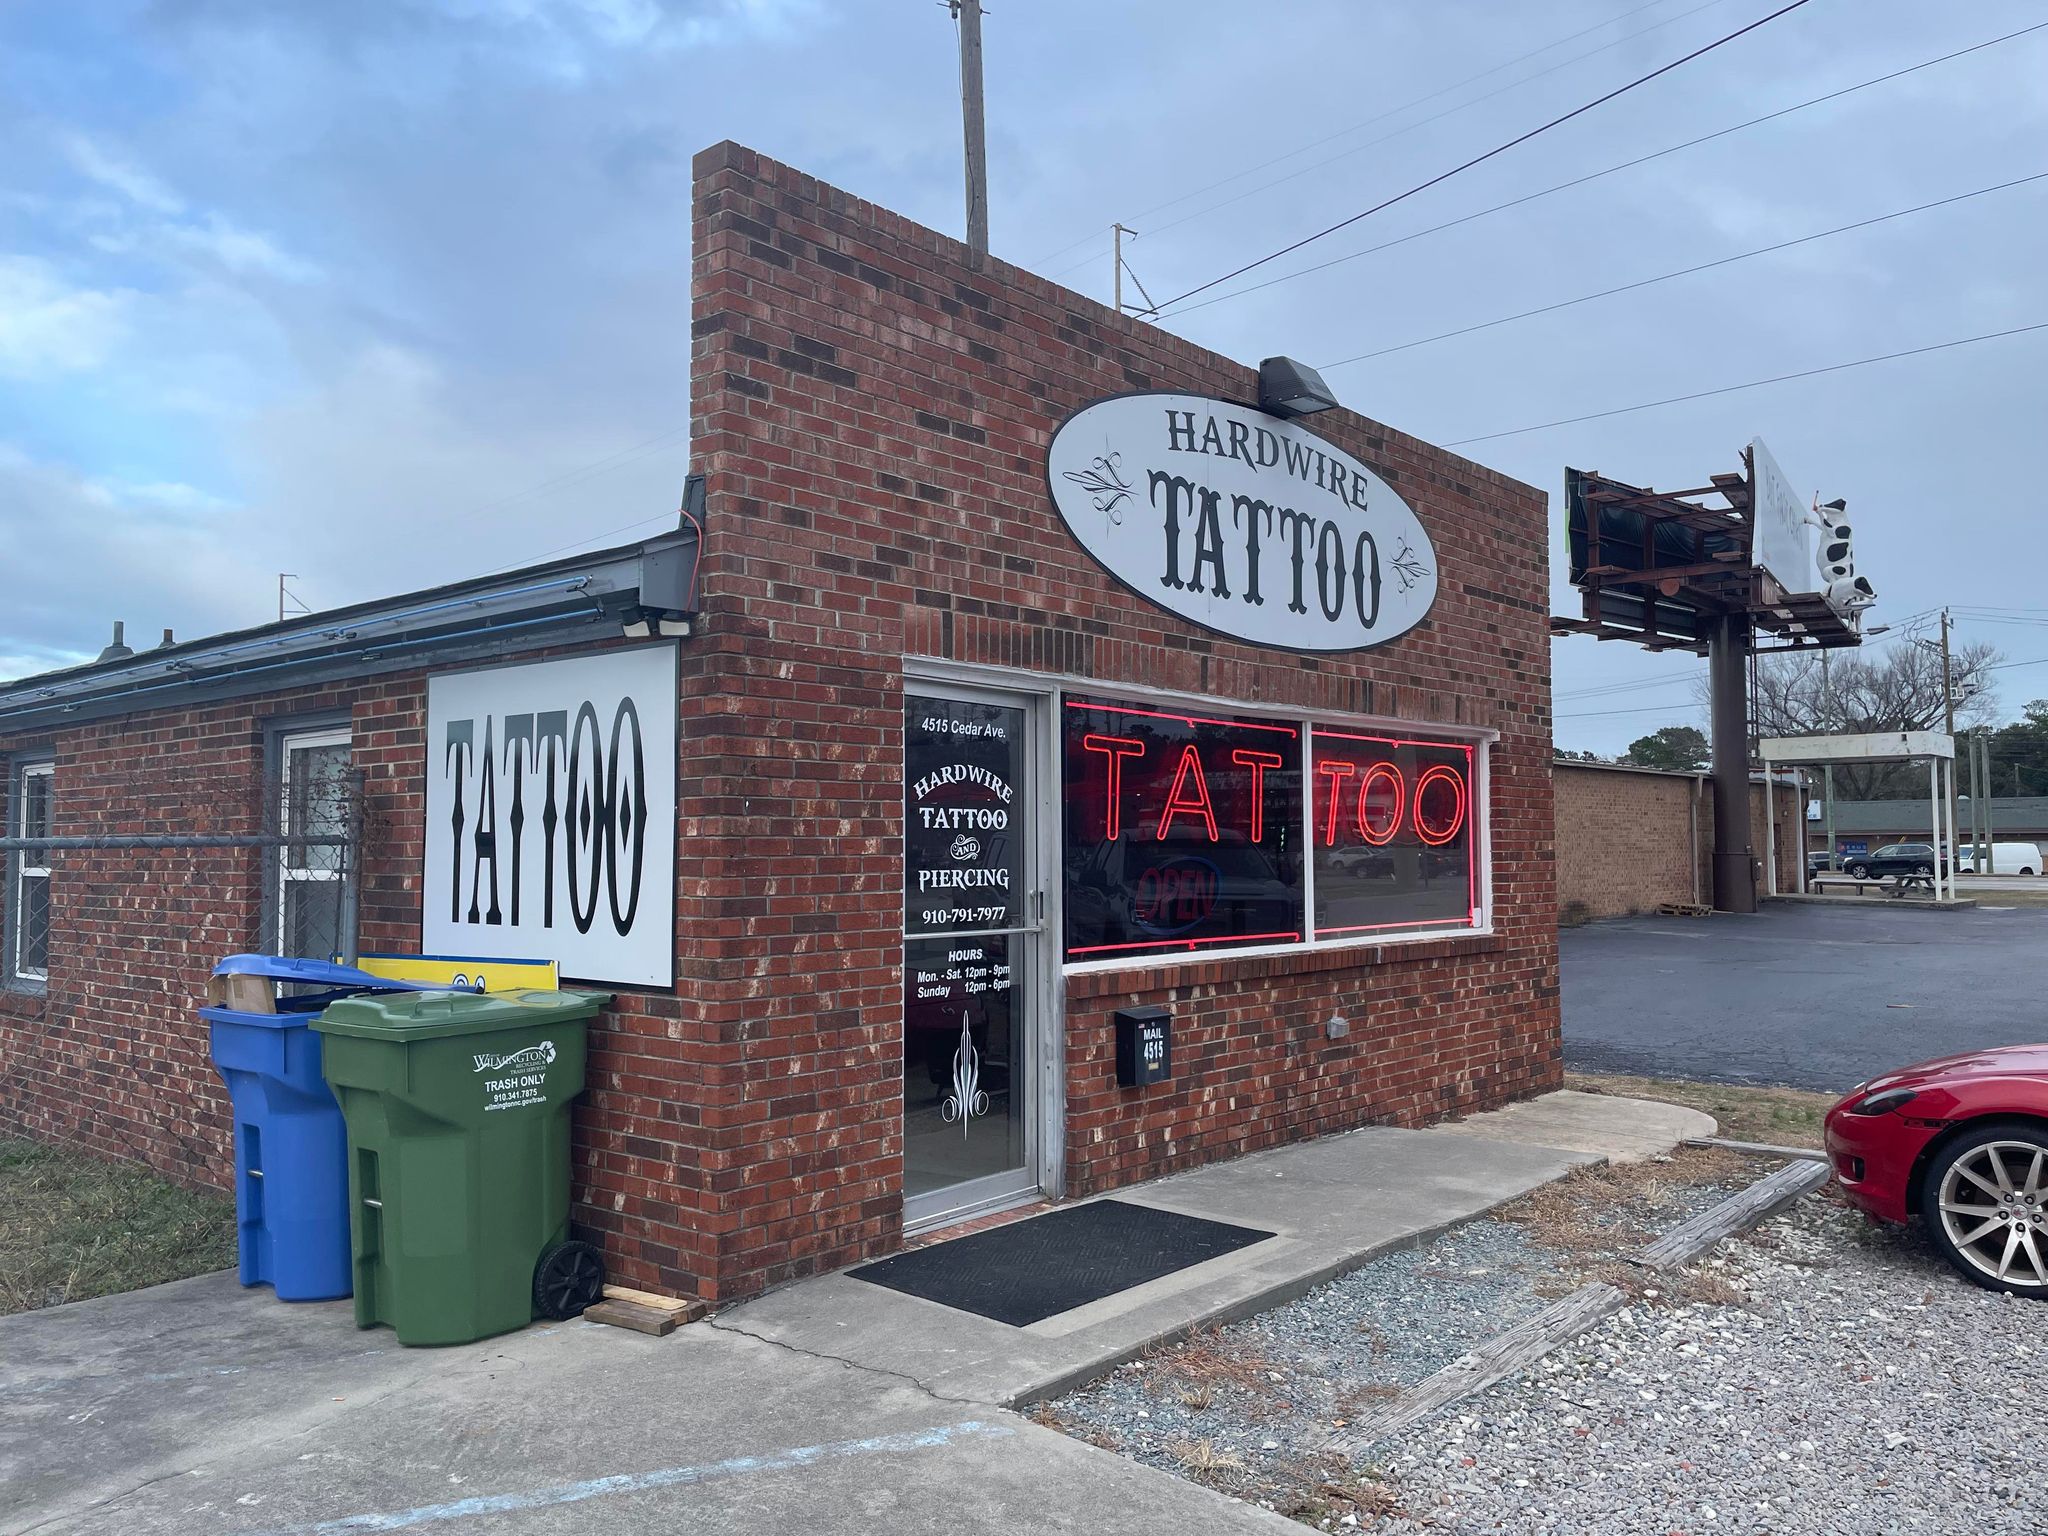 Local Tattoo Shop LGBT Community Unite Through Art  Canvas Tattoo  Art  Gallery